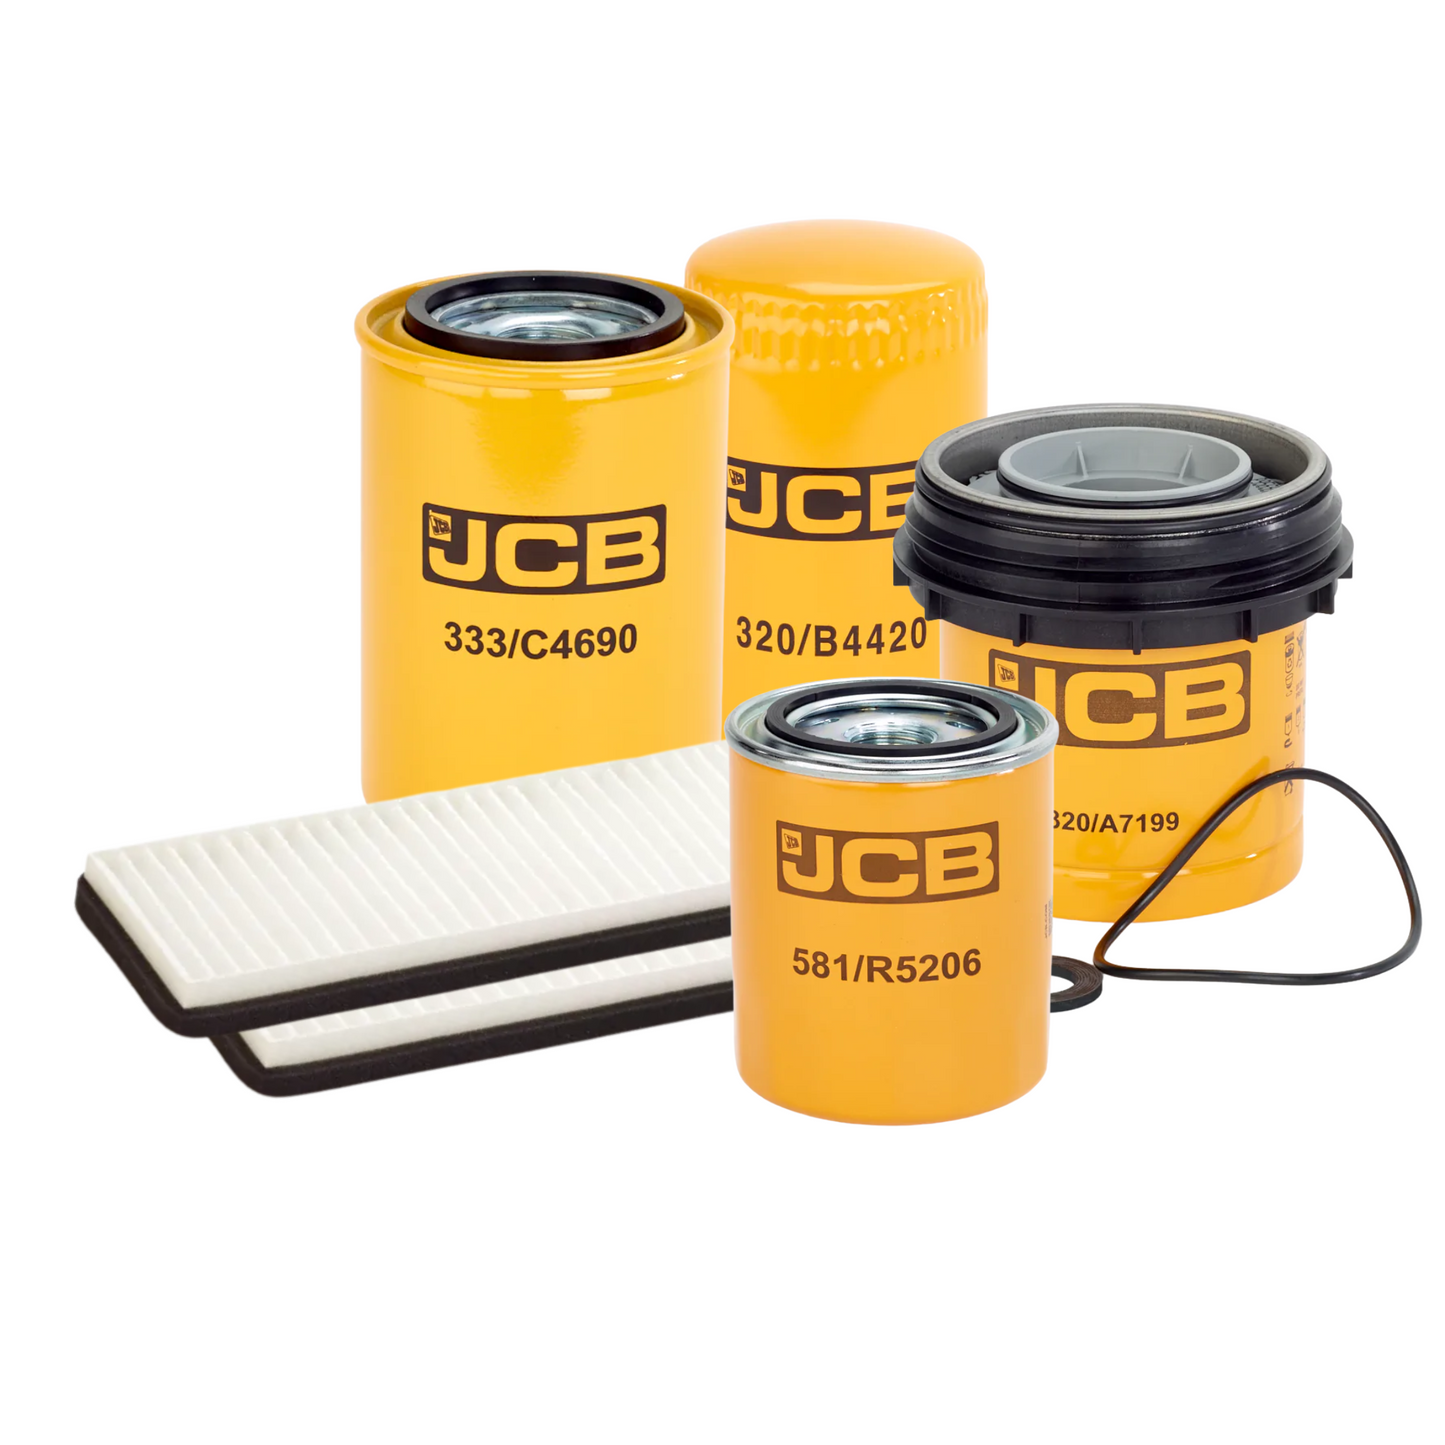 JCB 535-95 3500 Hour Filter Service Kit